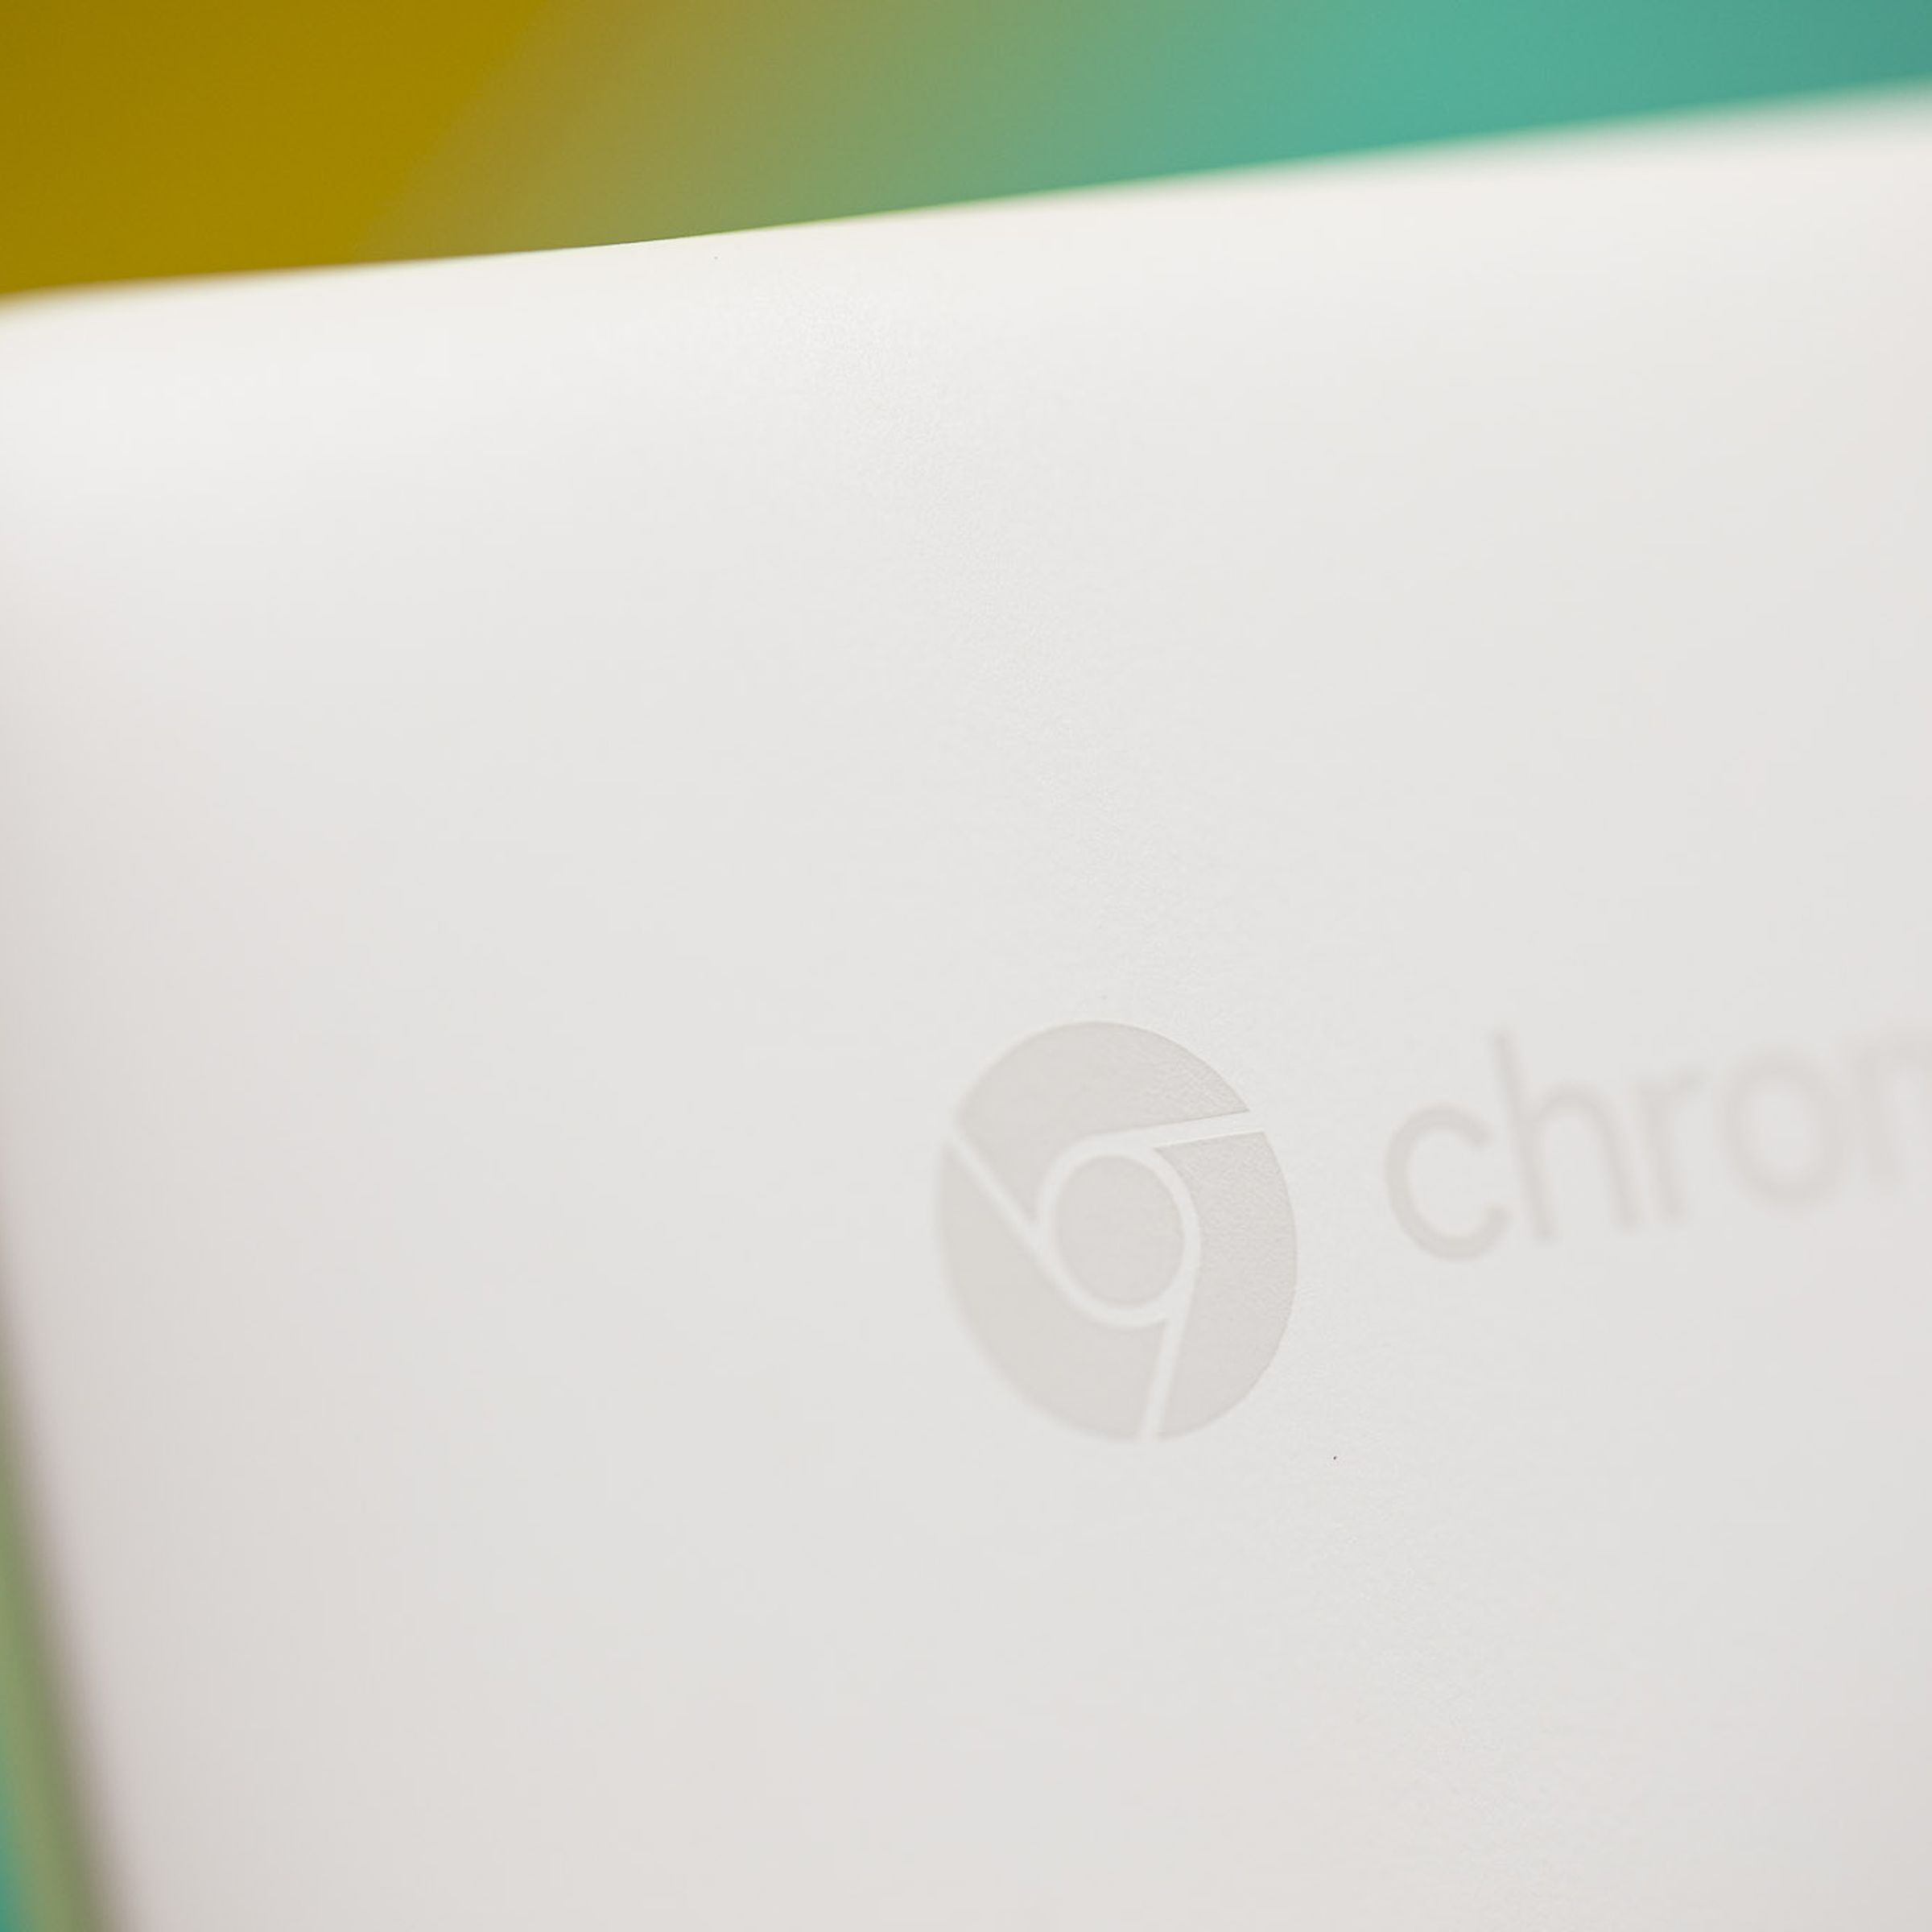 The Chrome OS logo on the HP Dragonfly Pro Chromebook.